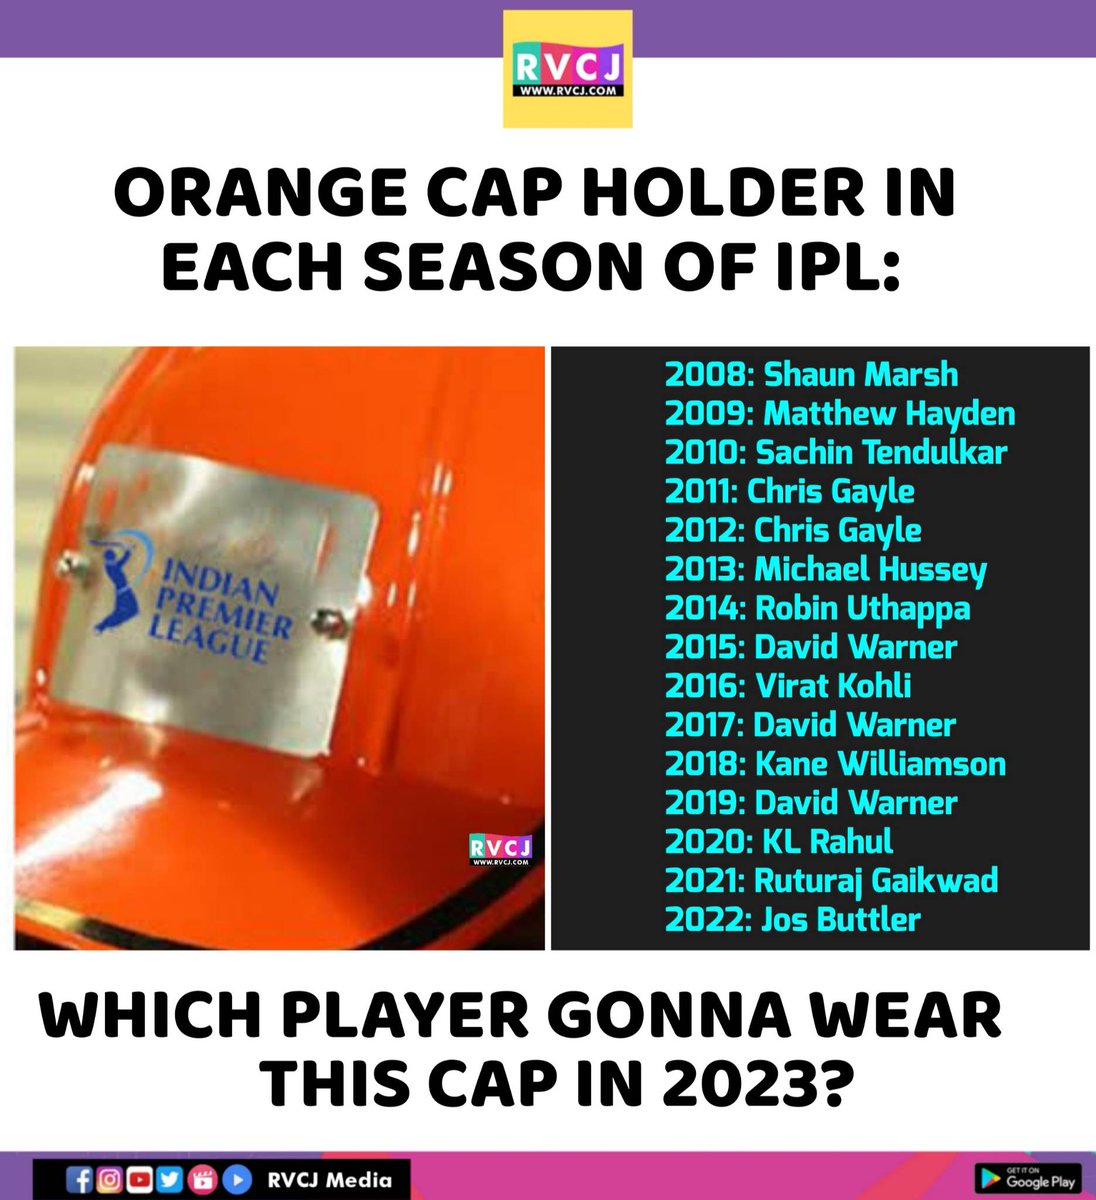 RVCJ Media on Twitter "Orange Cap Holder in IPL 2023"